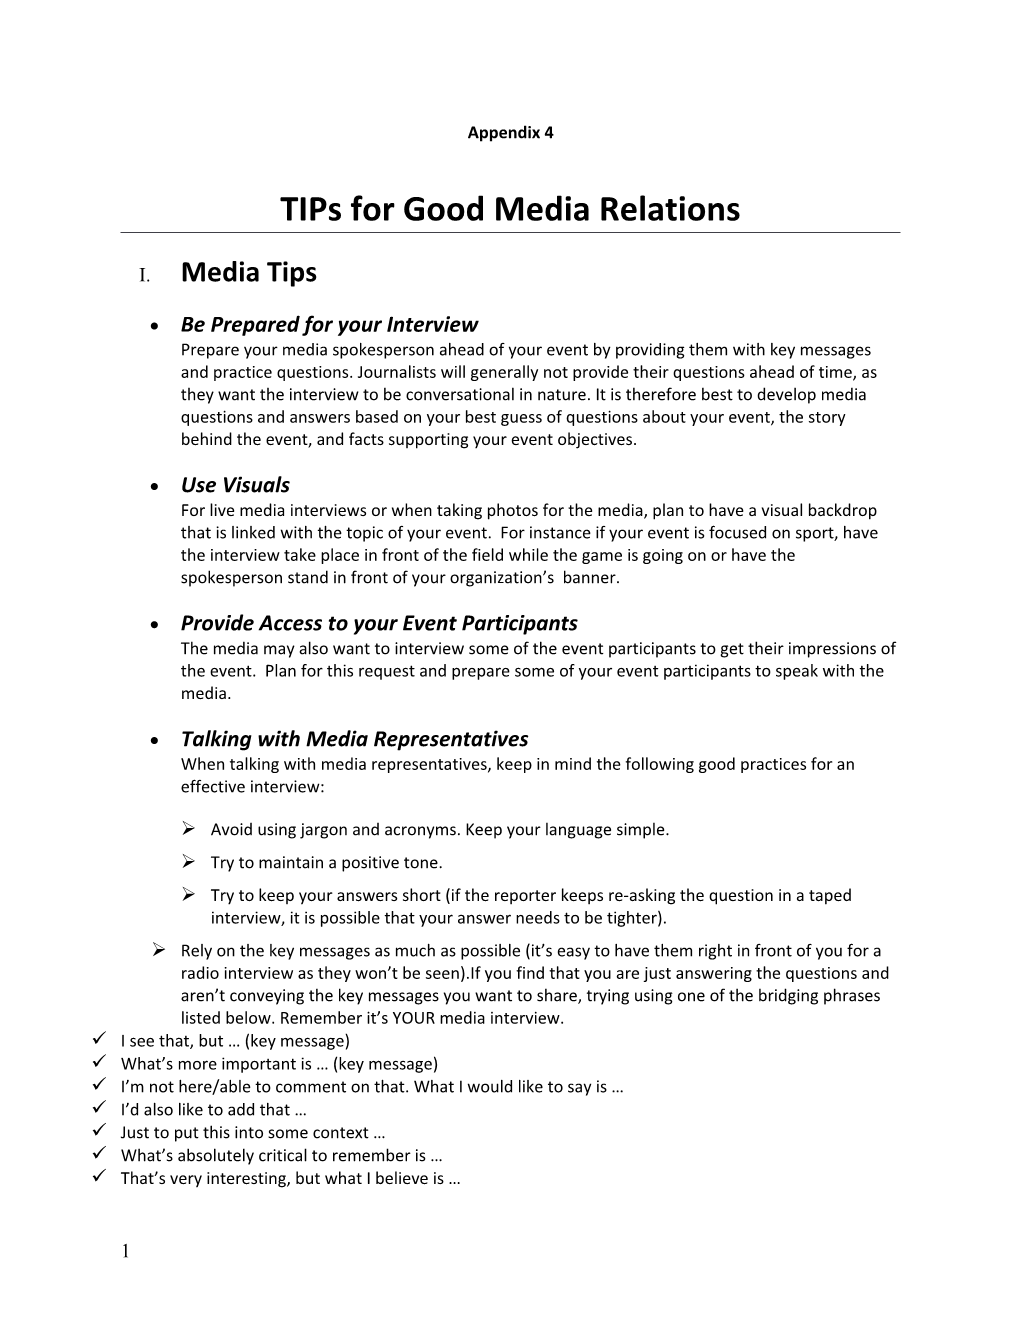 Tips for Good Media Relations